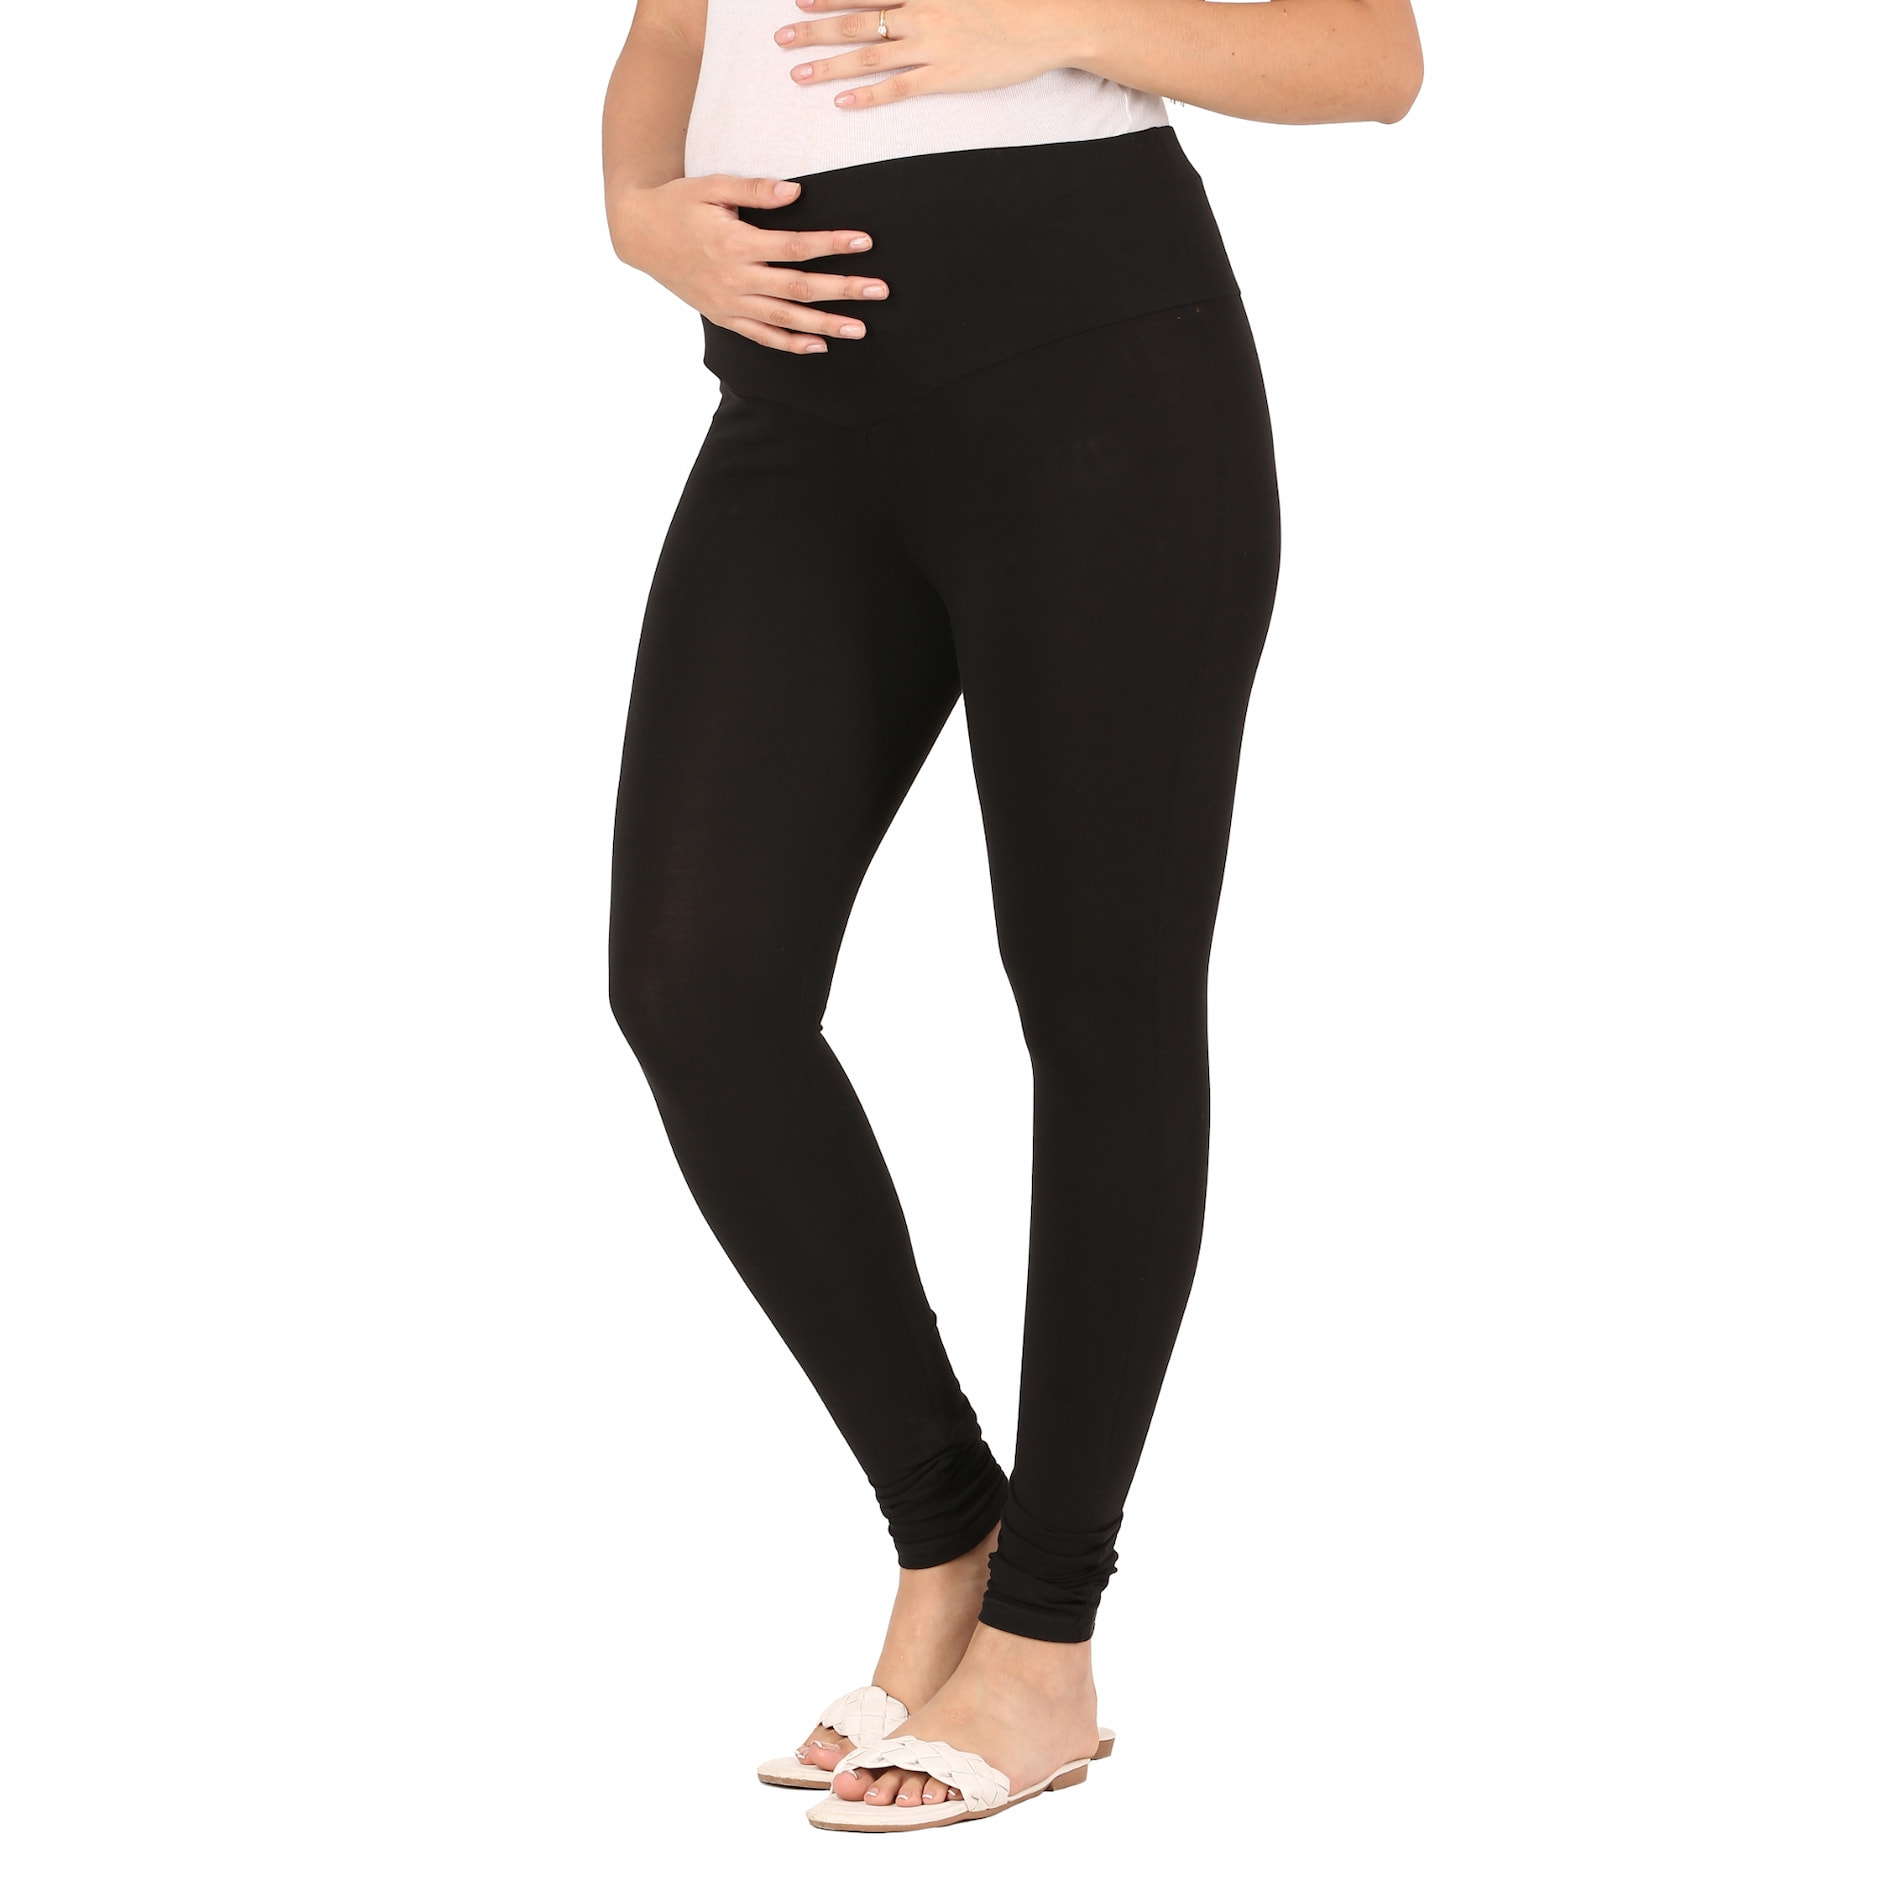 Mylo Stretchable Pregnancy & Post Delivery Leggings - Black (L)